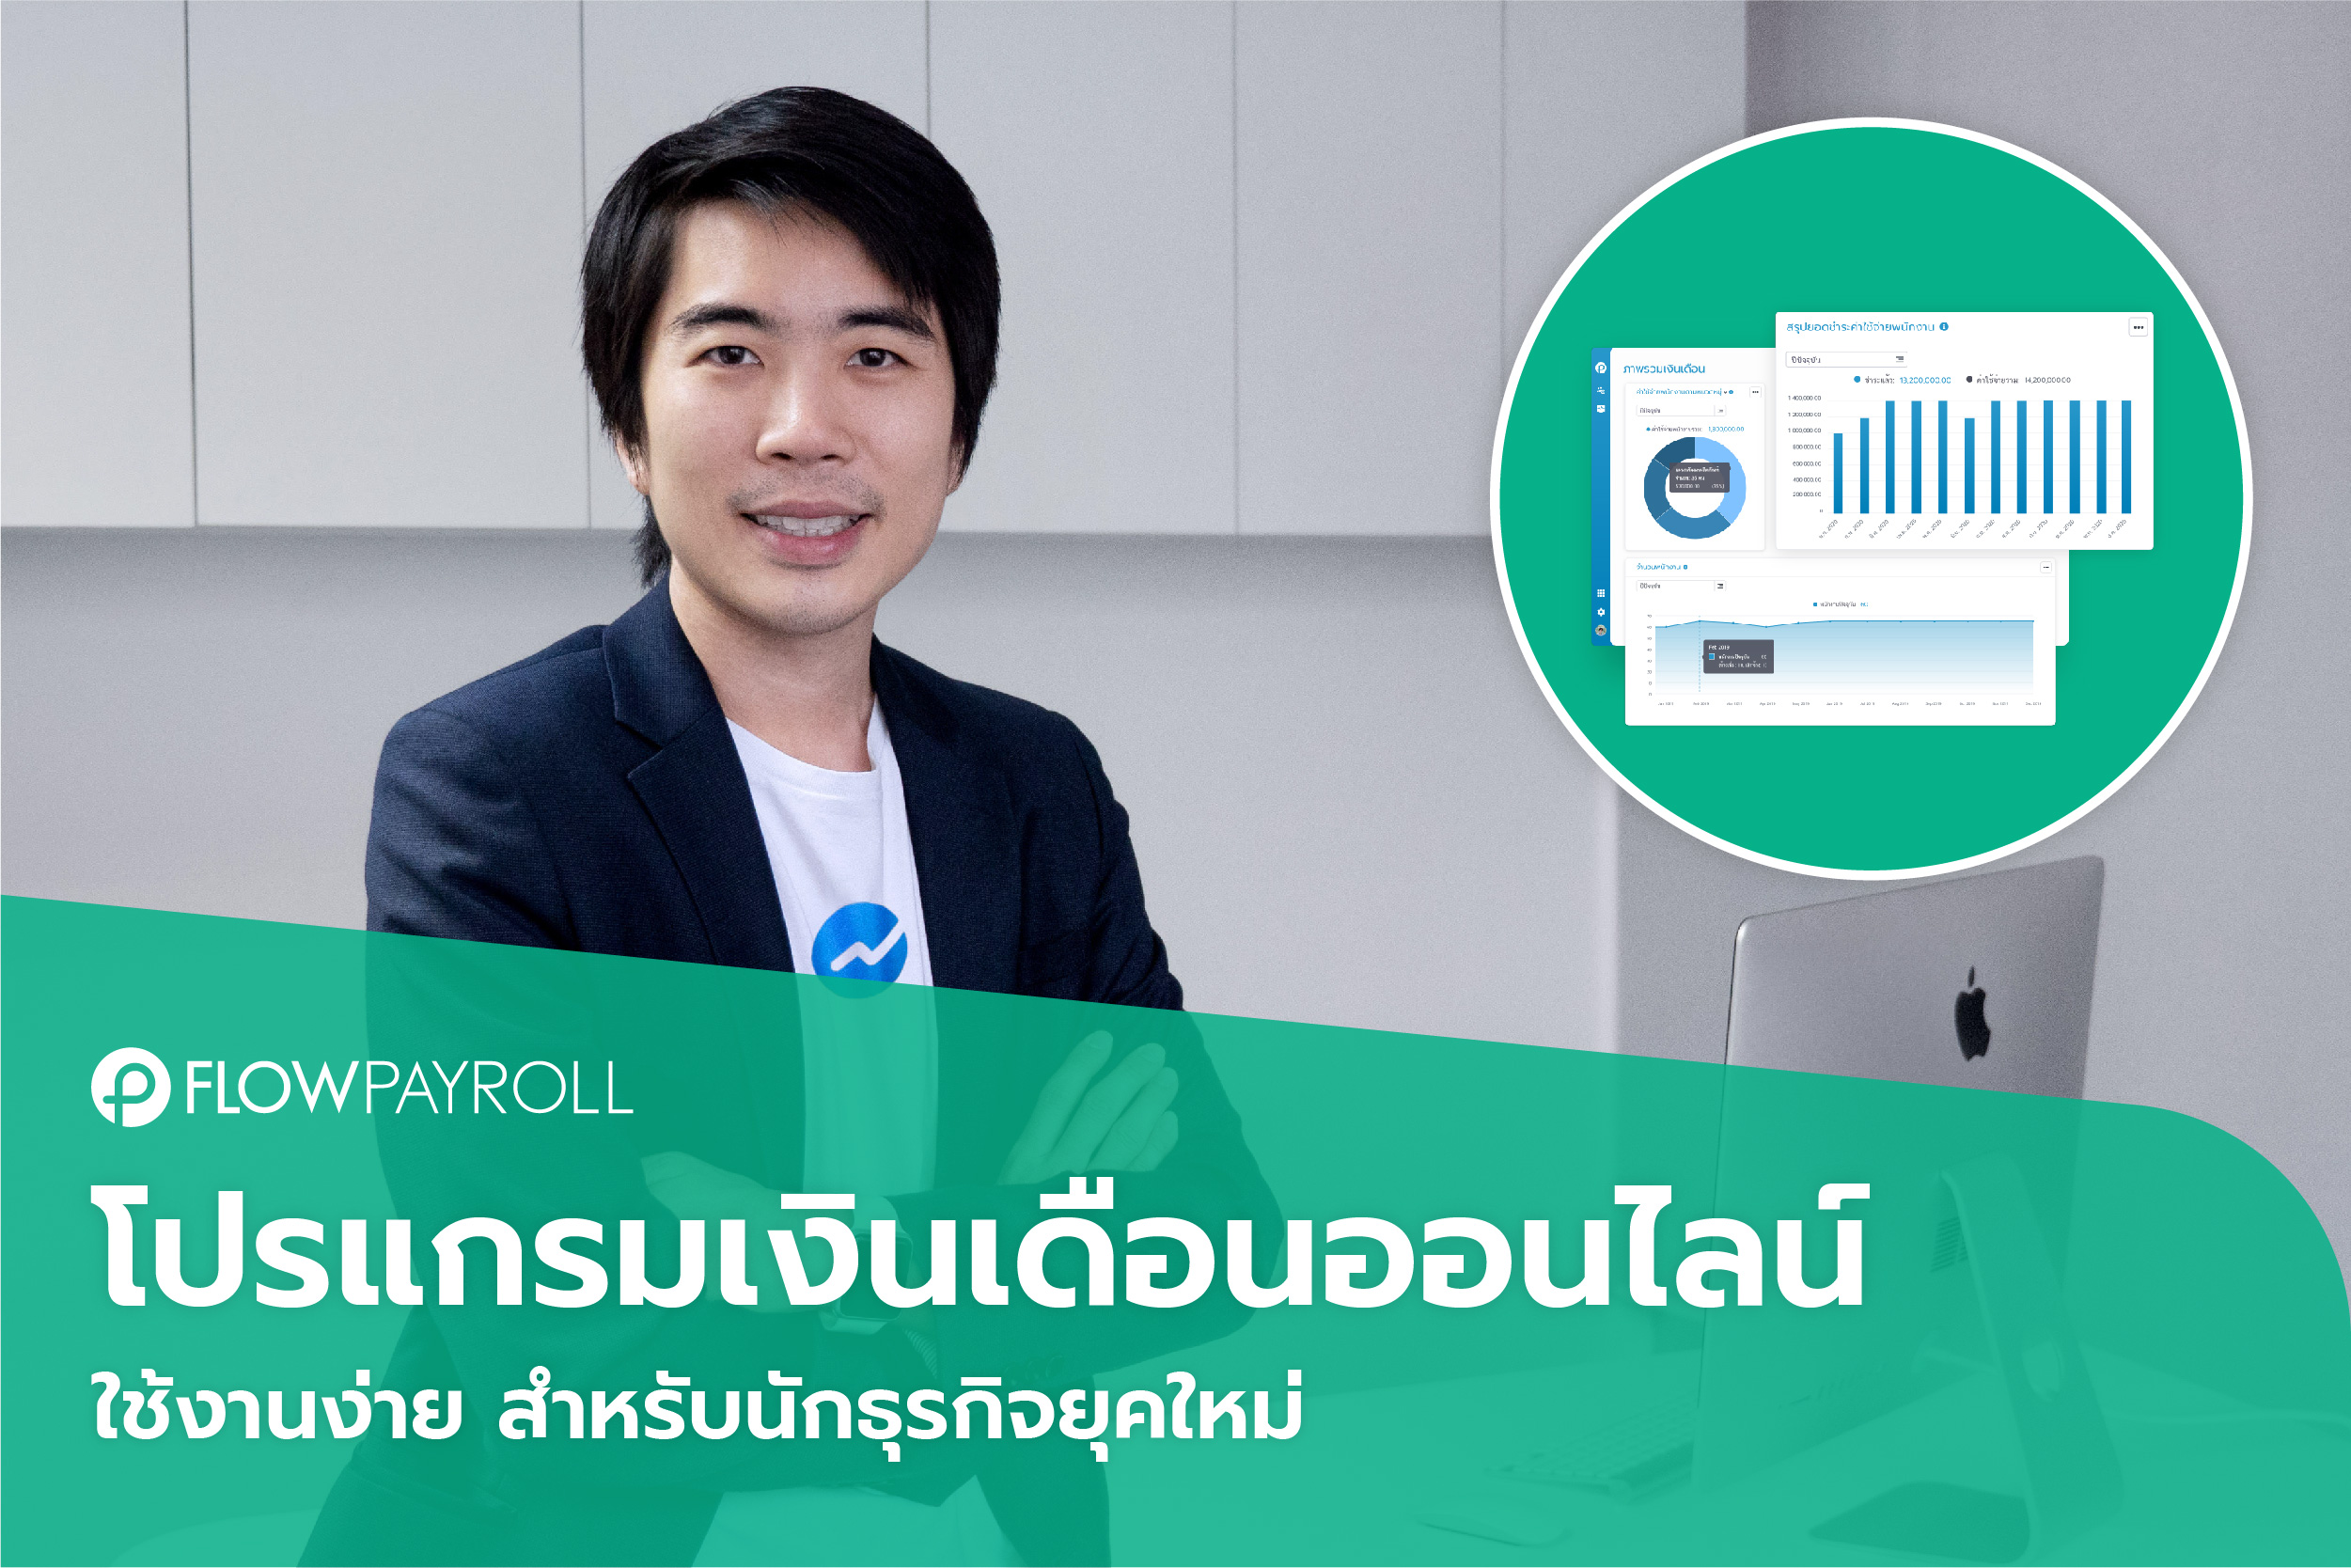 FlowPayroll for Startup Thailand